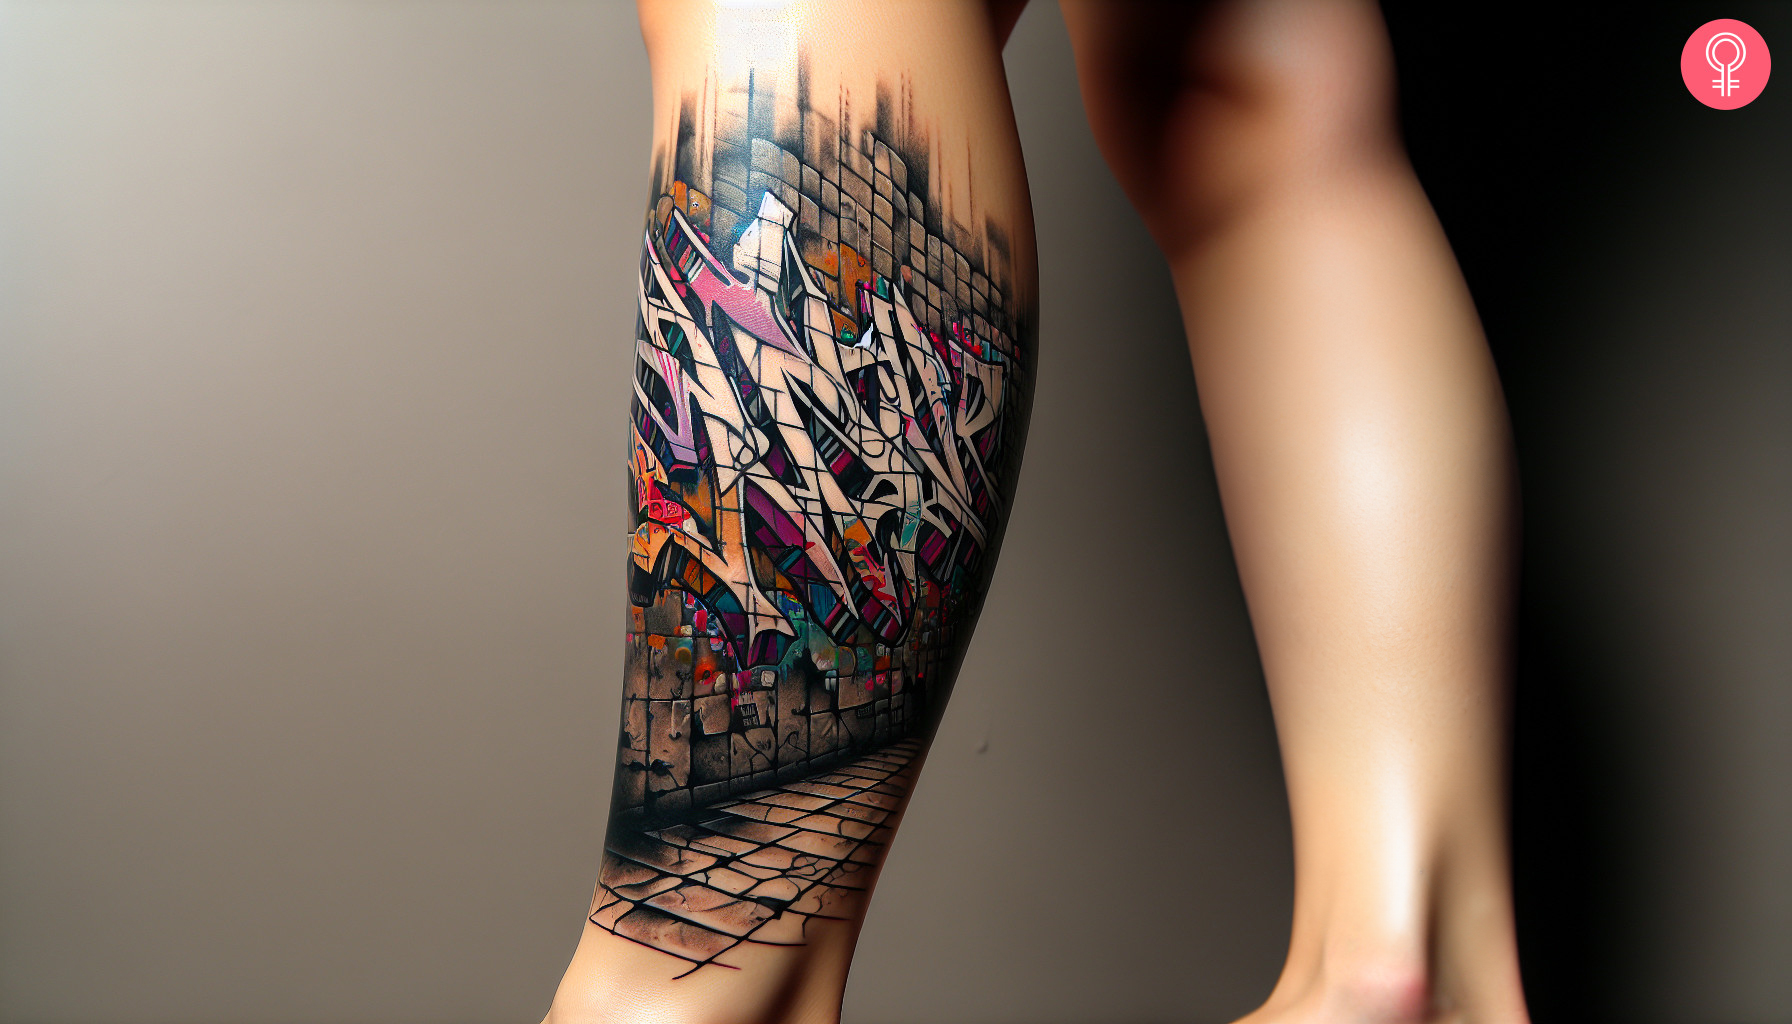 A tattoo on a woman’s calf featuring a graffiti wall